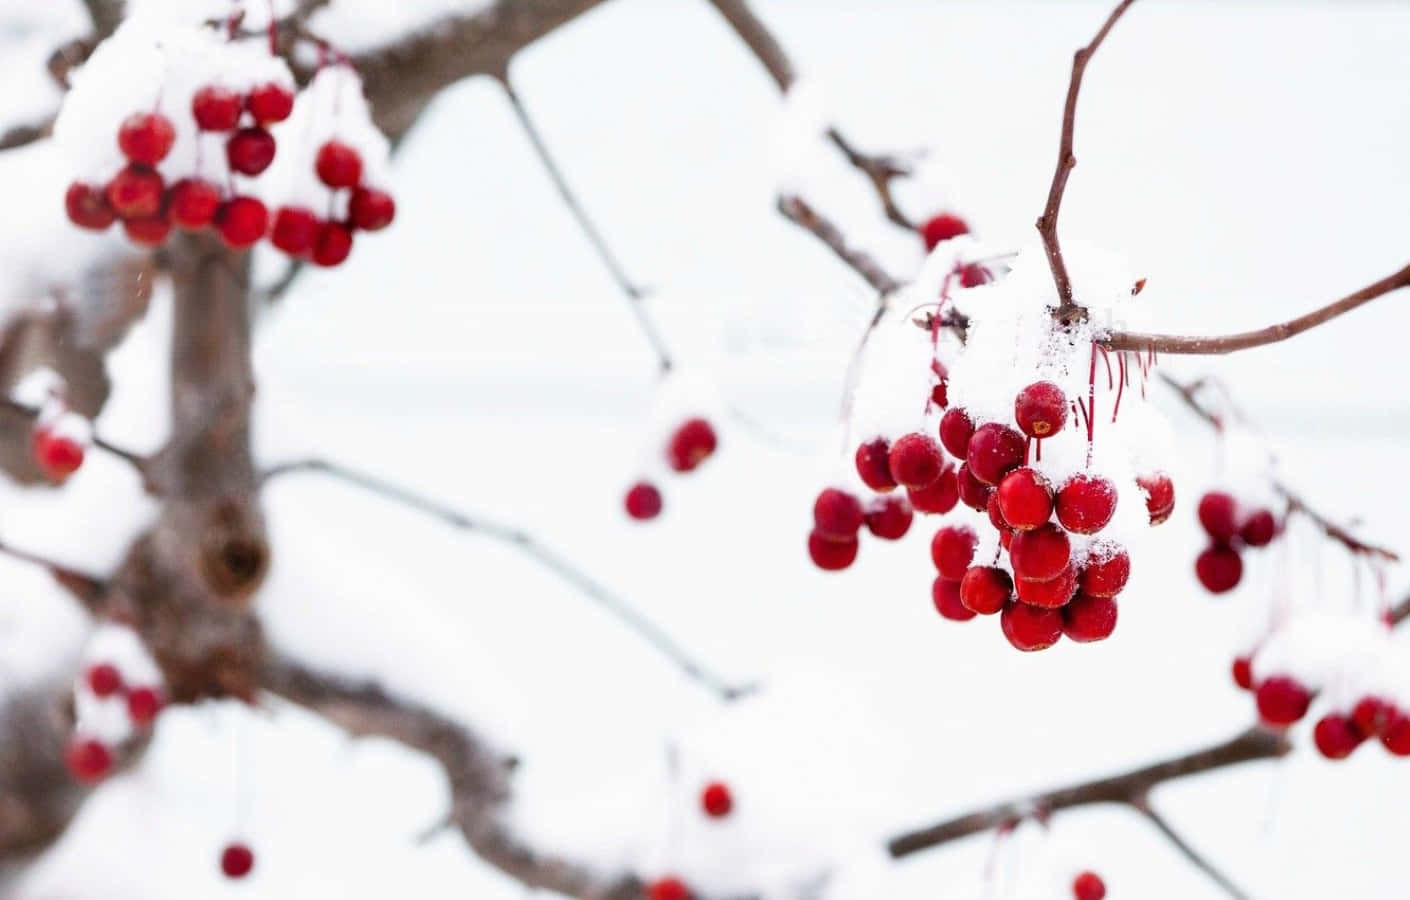 Winter berries on a snowy branch Wallpaper